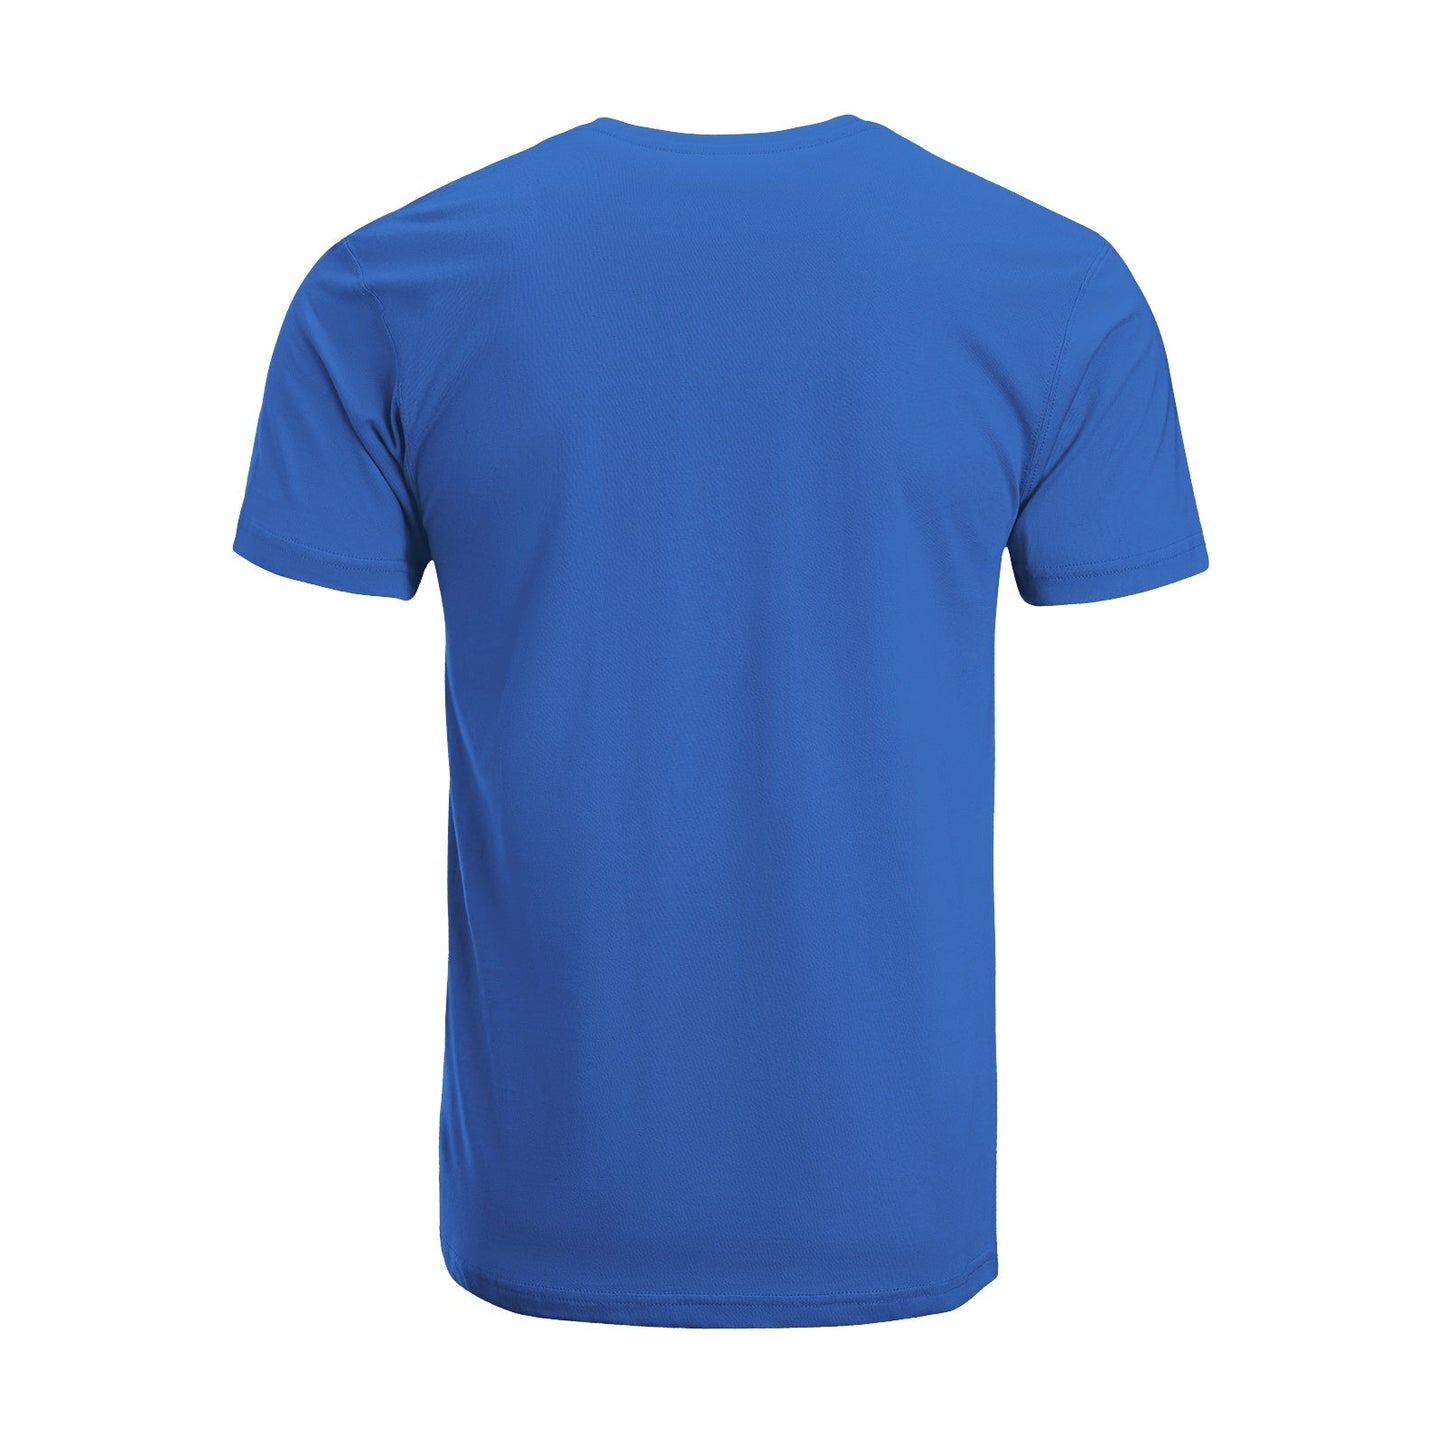 Unisex Short Sleeve Crew Neck Cotton Jersey T-Shirt VEGAN 27